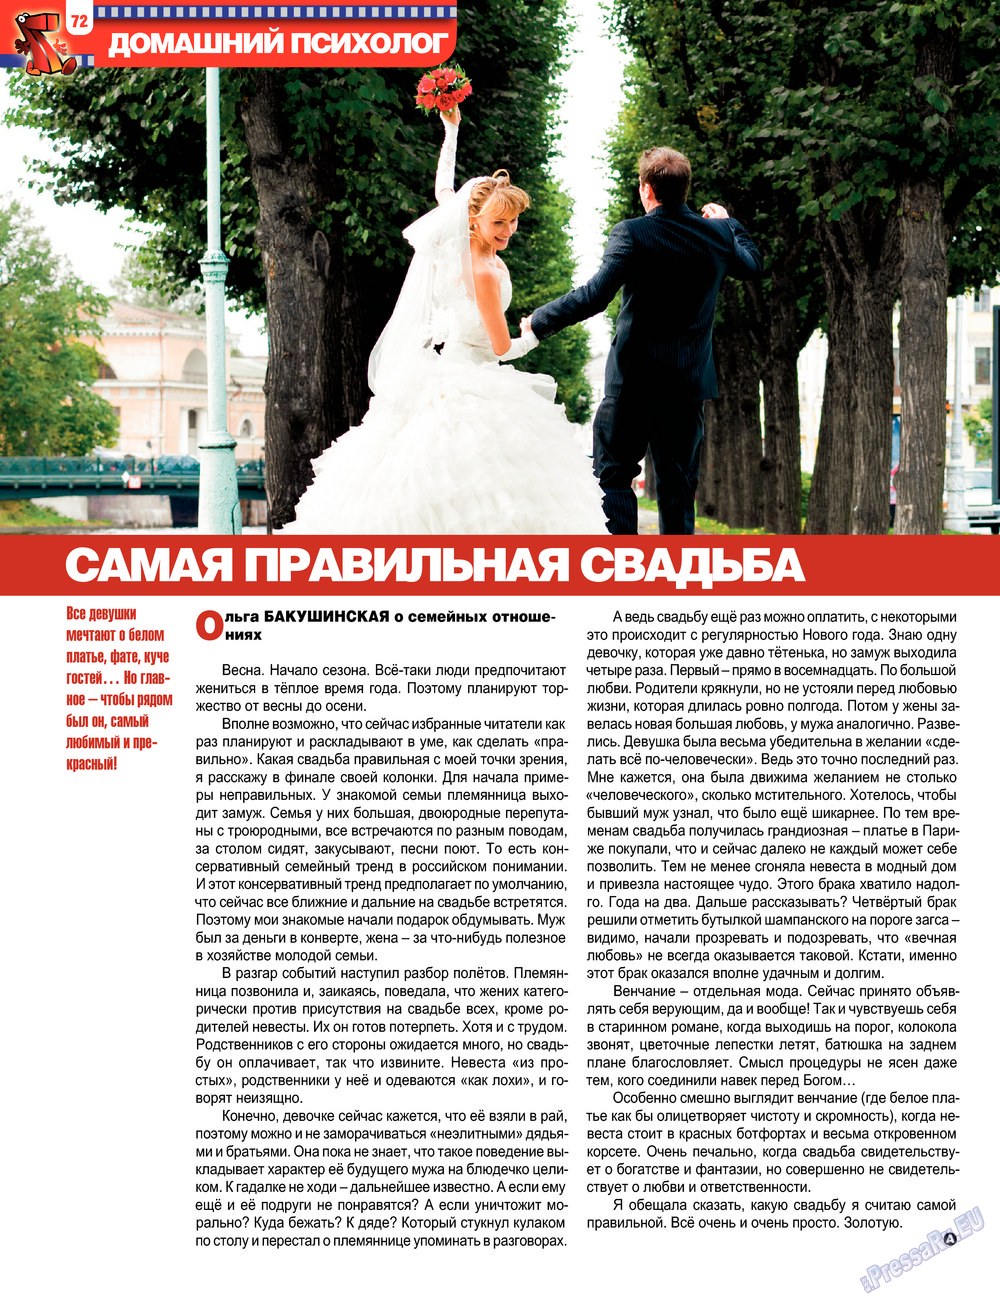 7плюс7я (журнал). 2013 год, номер 17, стр. 72